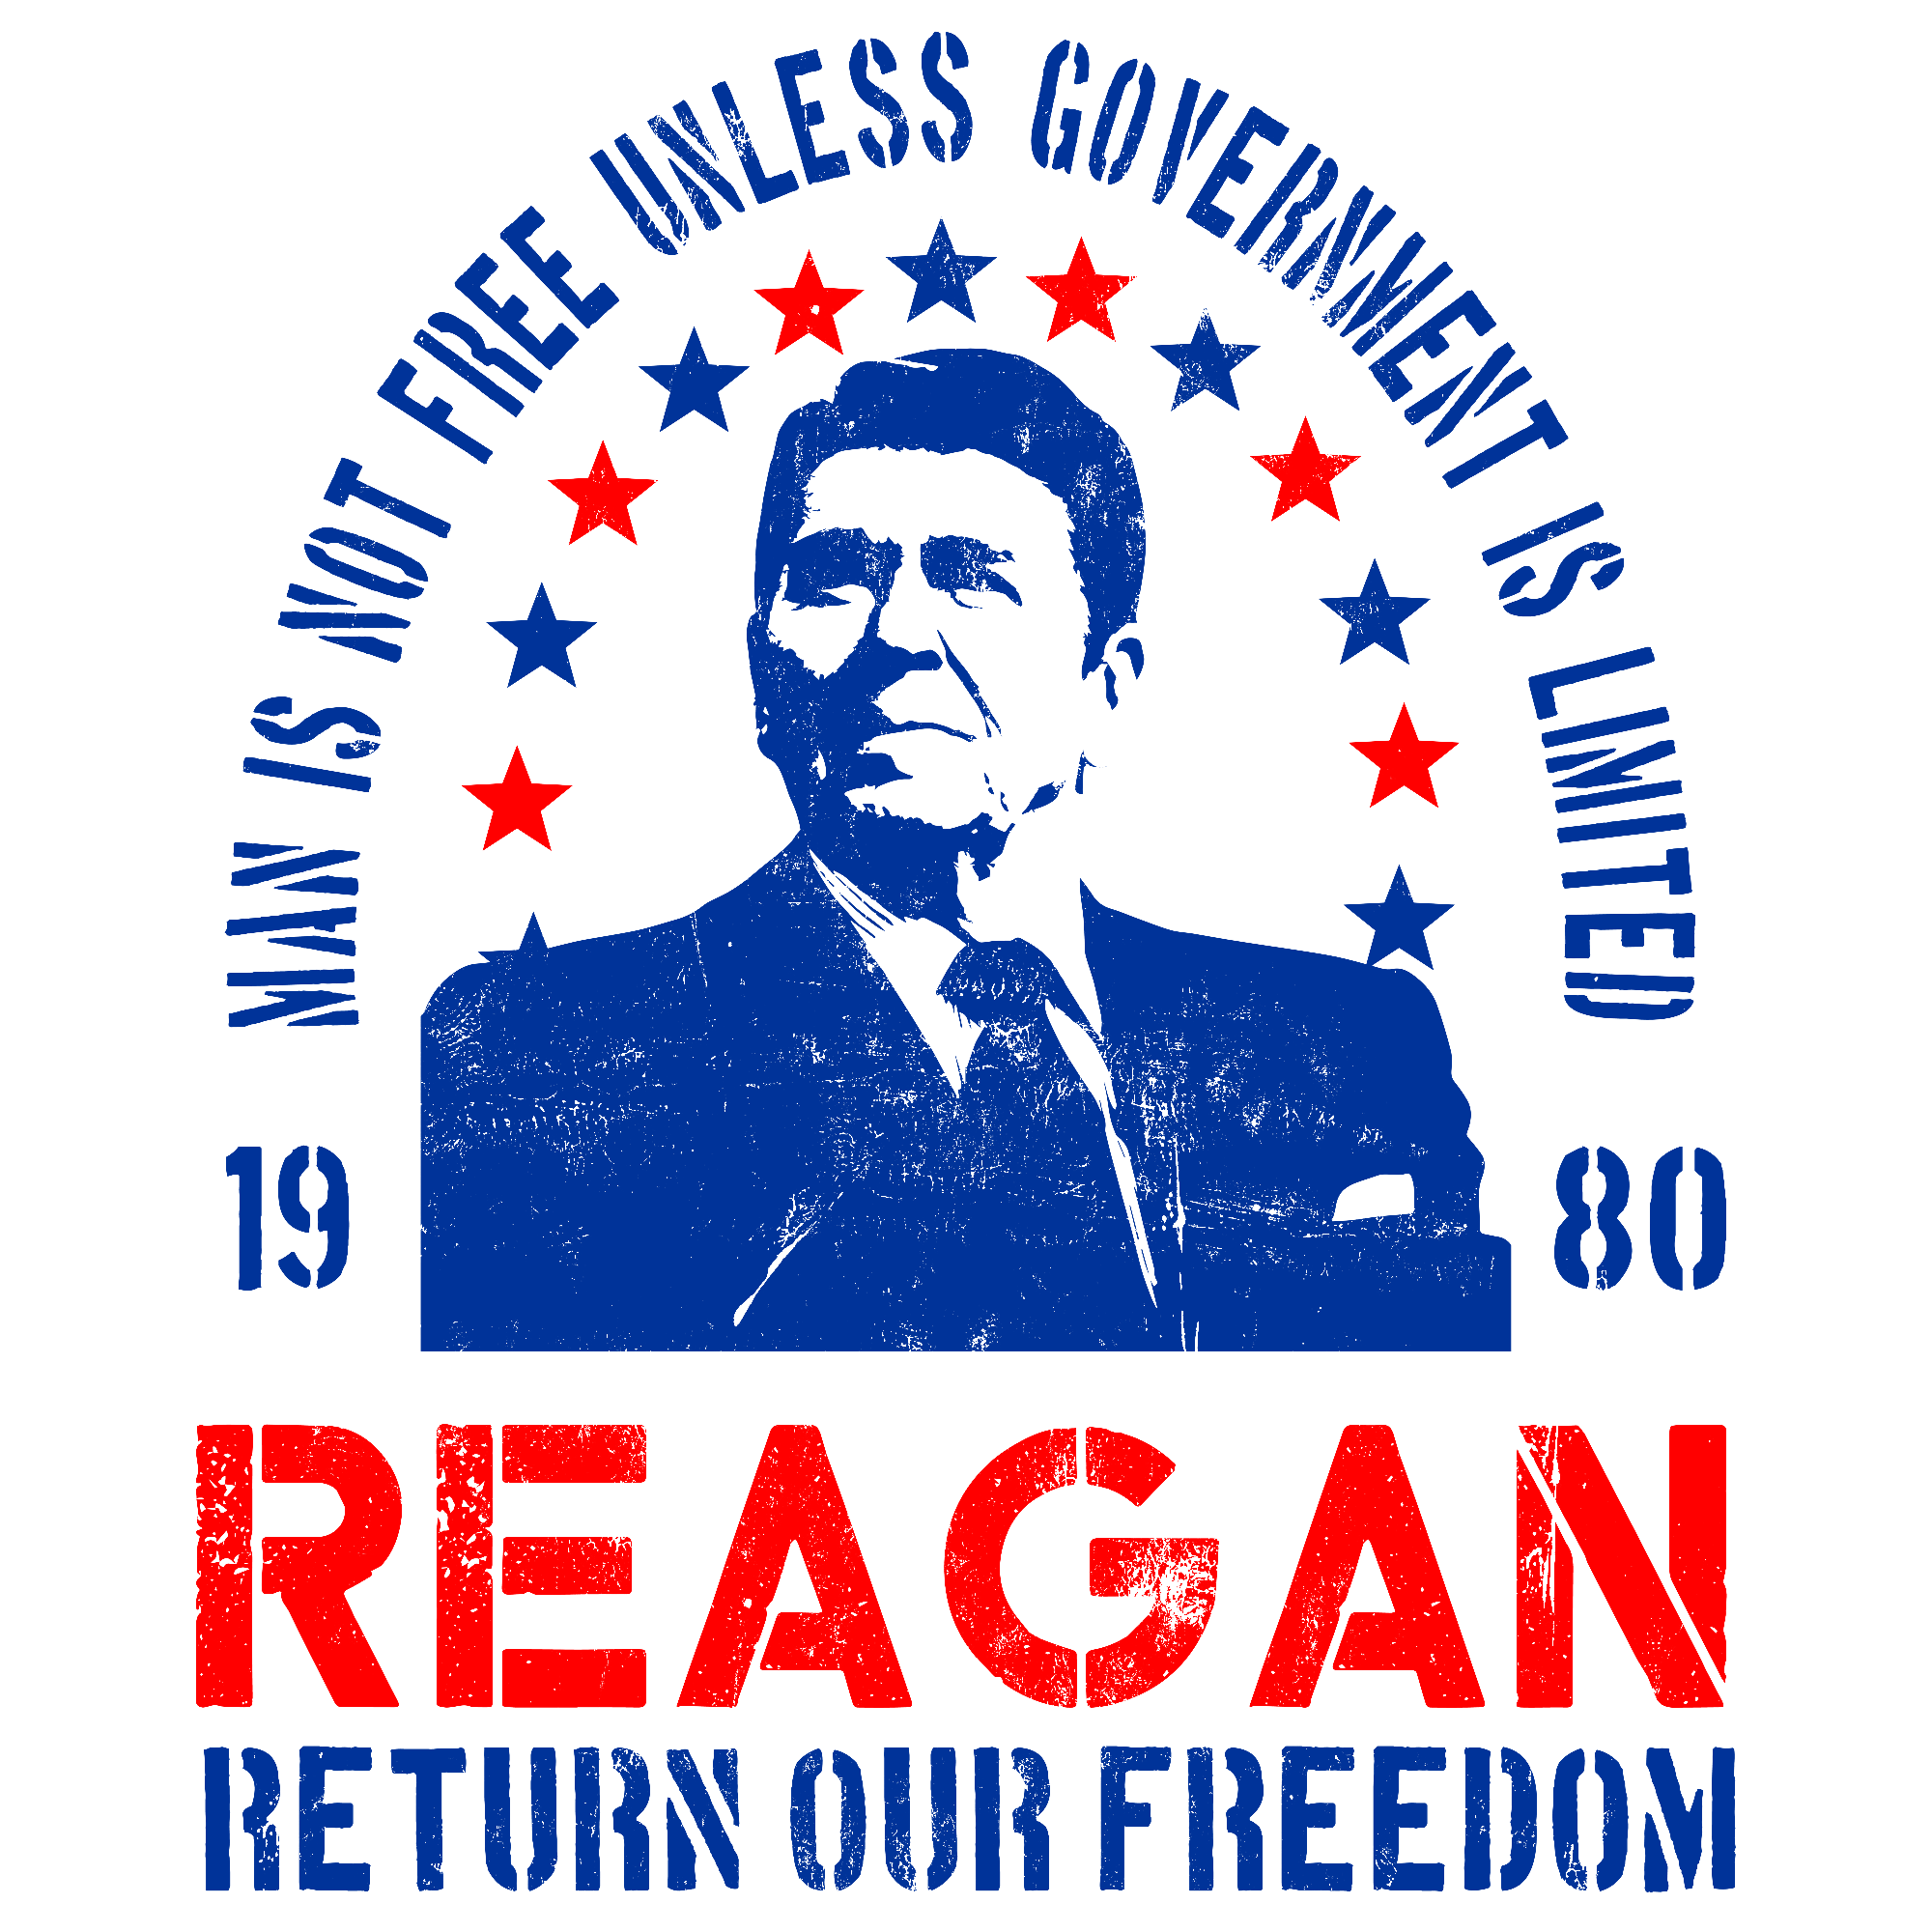 DIA Ronald Reagan Freedom Mens T-Shirt